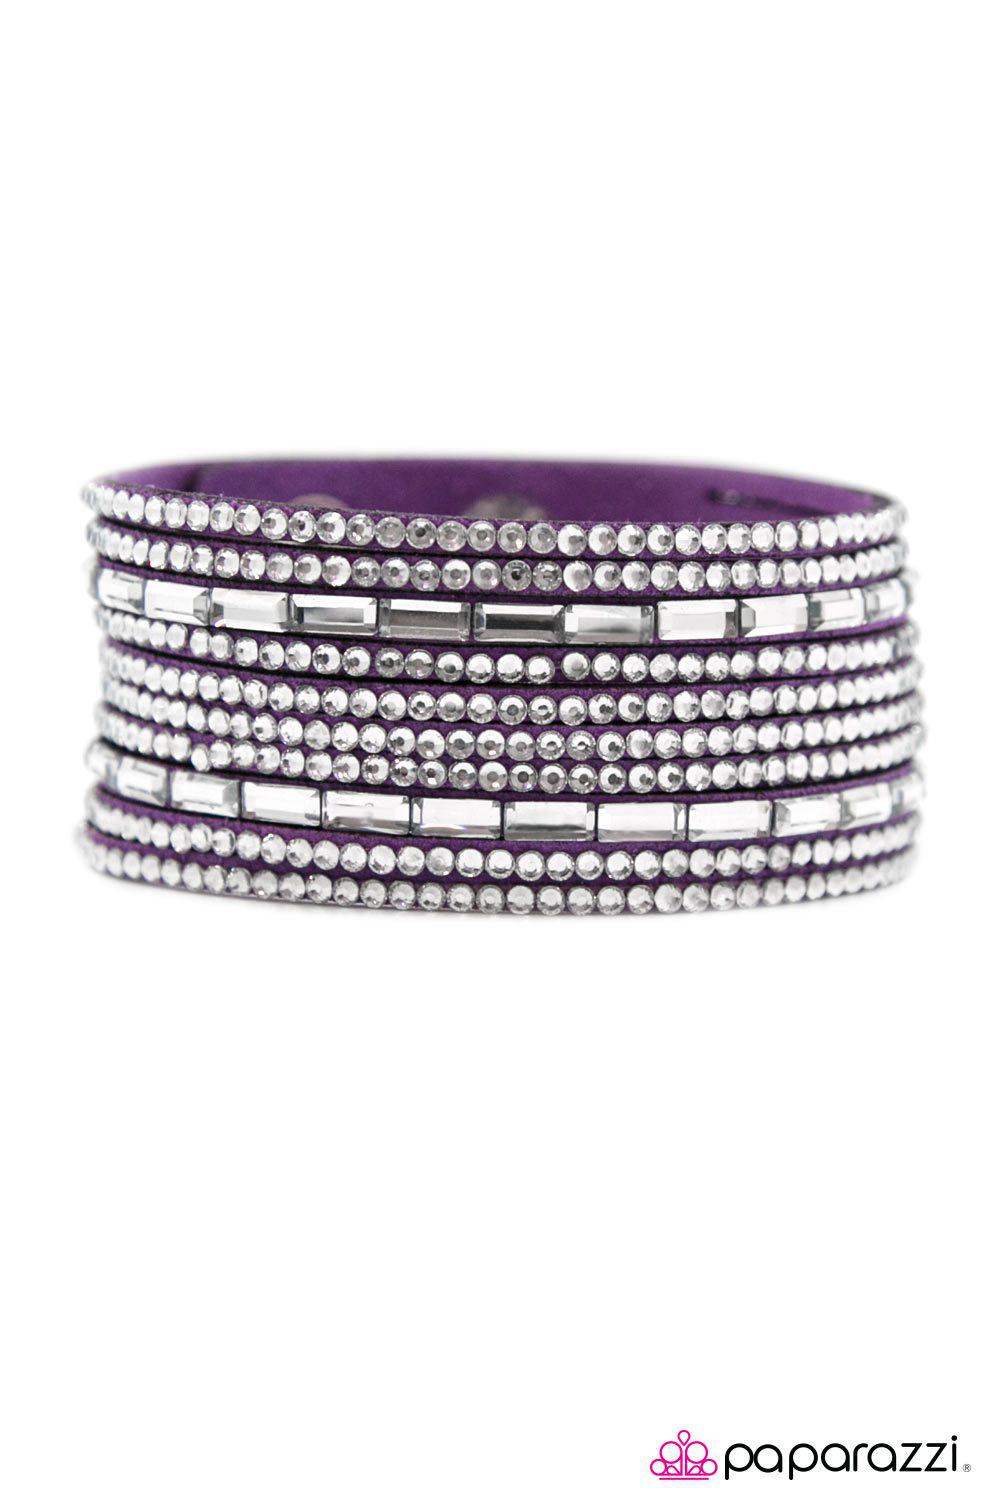 Name Your Price Purple and White Rhinestone Urban Wrap Snap Bracelet - Paparazzi Accessories-CarasShop.com - $5 Jewelry by Cara Jewels